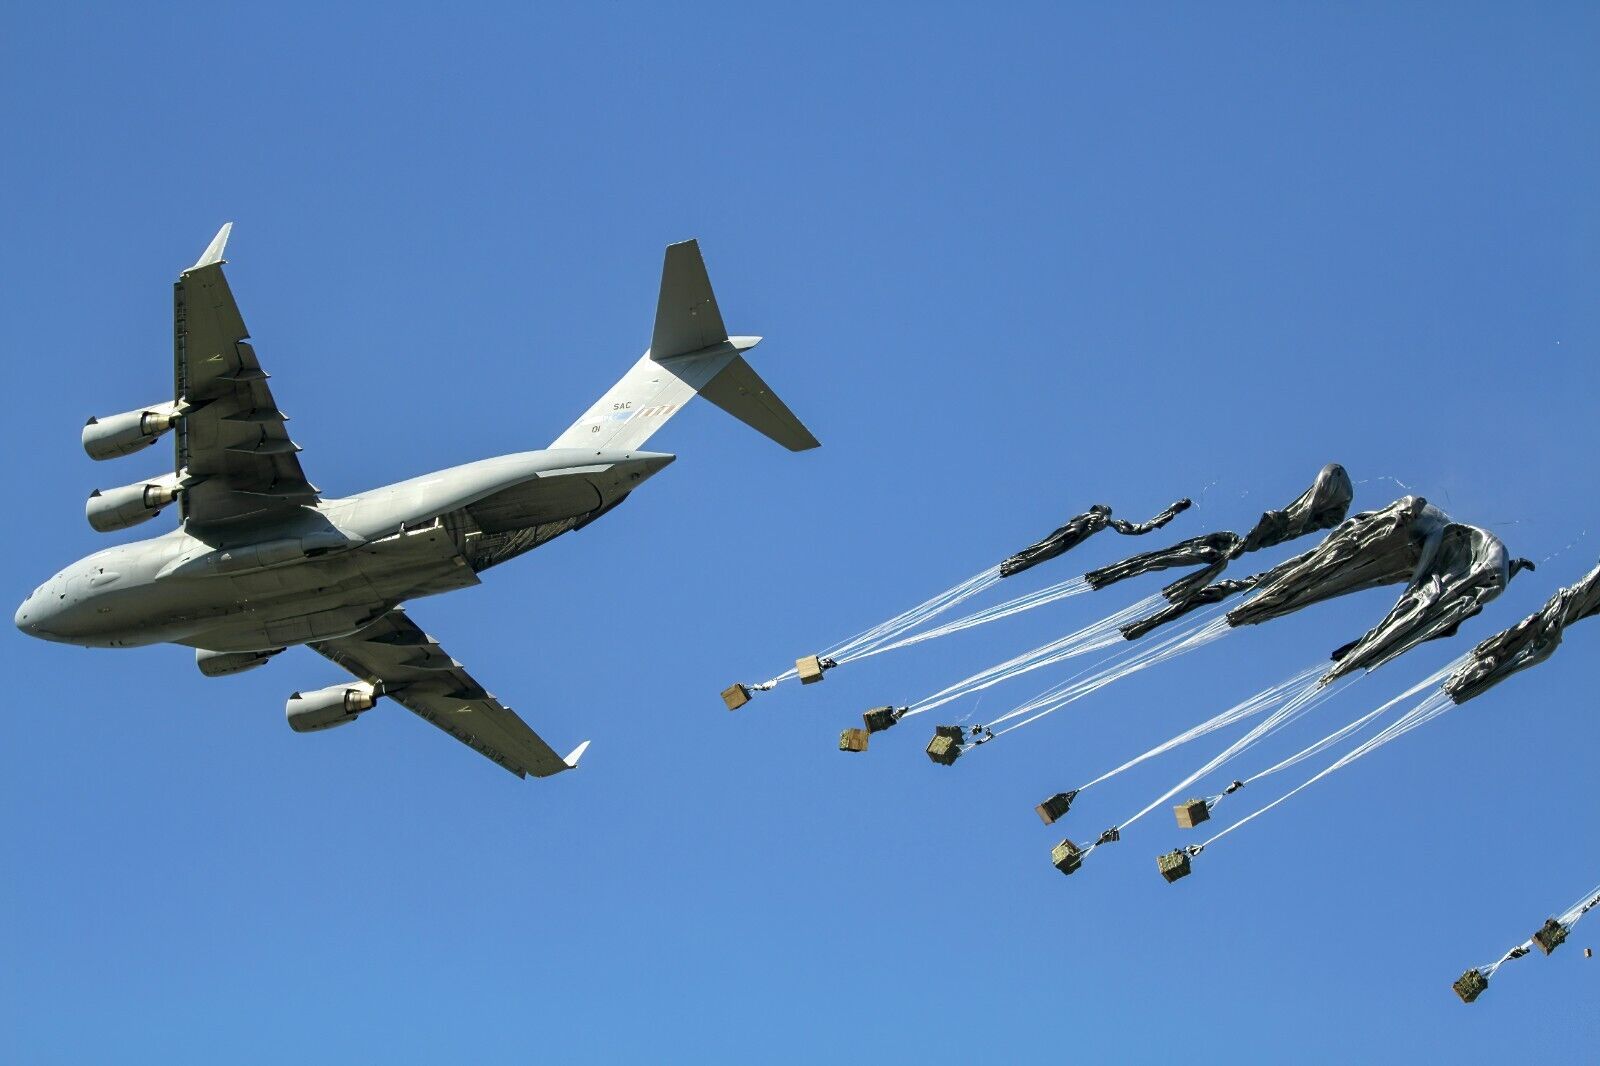 C-17 GLOBEMASTER  Drops Equipment-Poland-Swift Response 18 Exercise-8x12 PHOTO